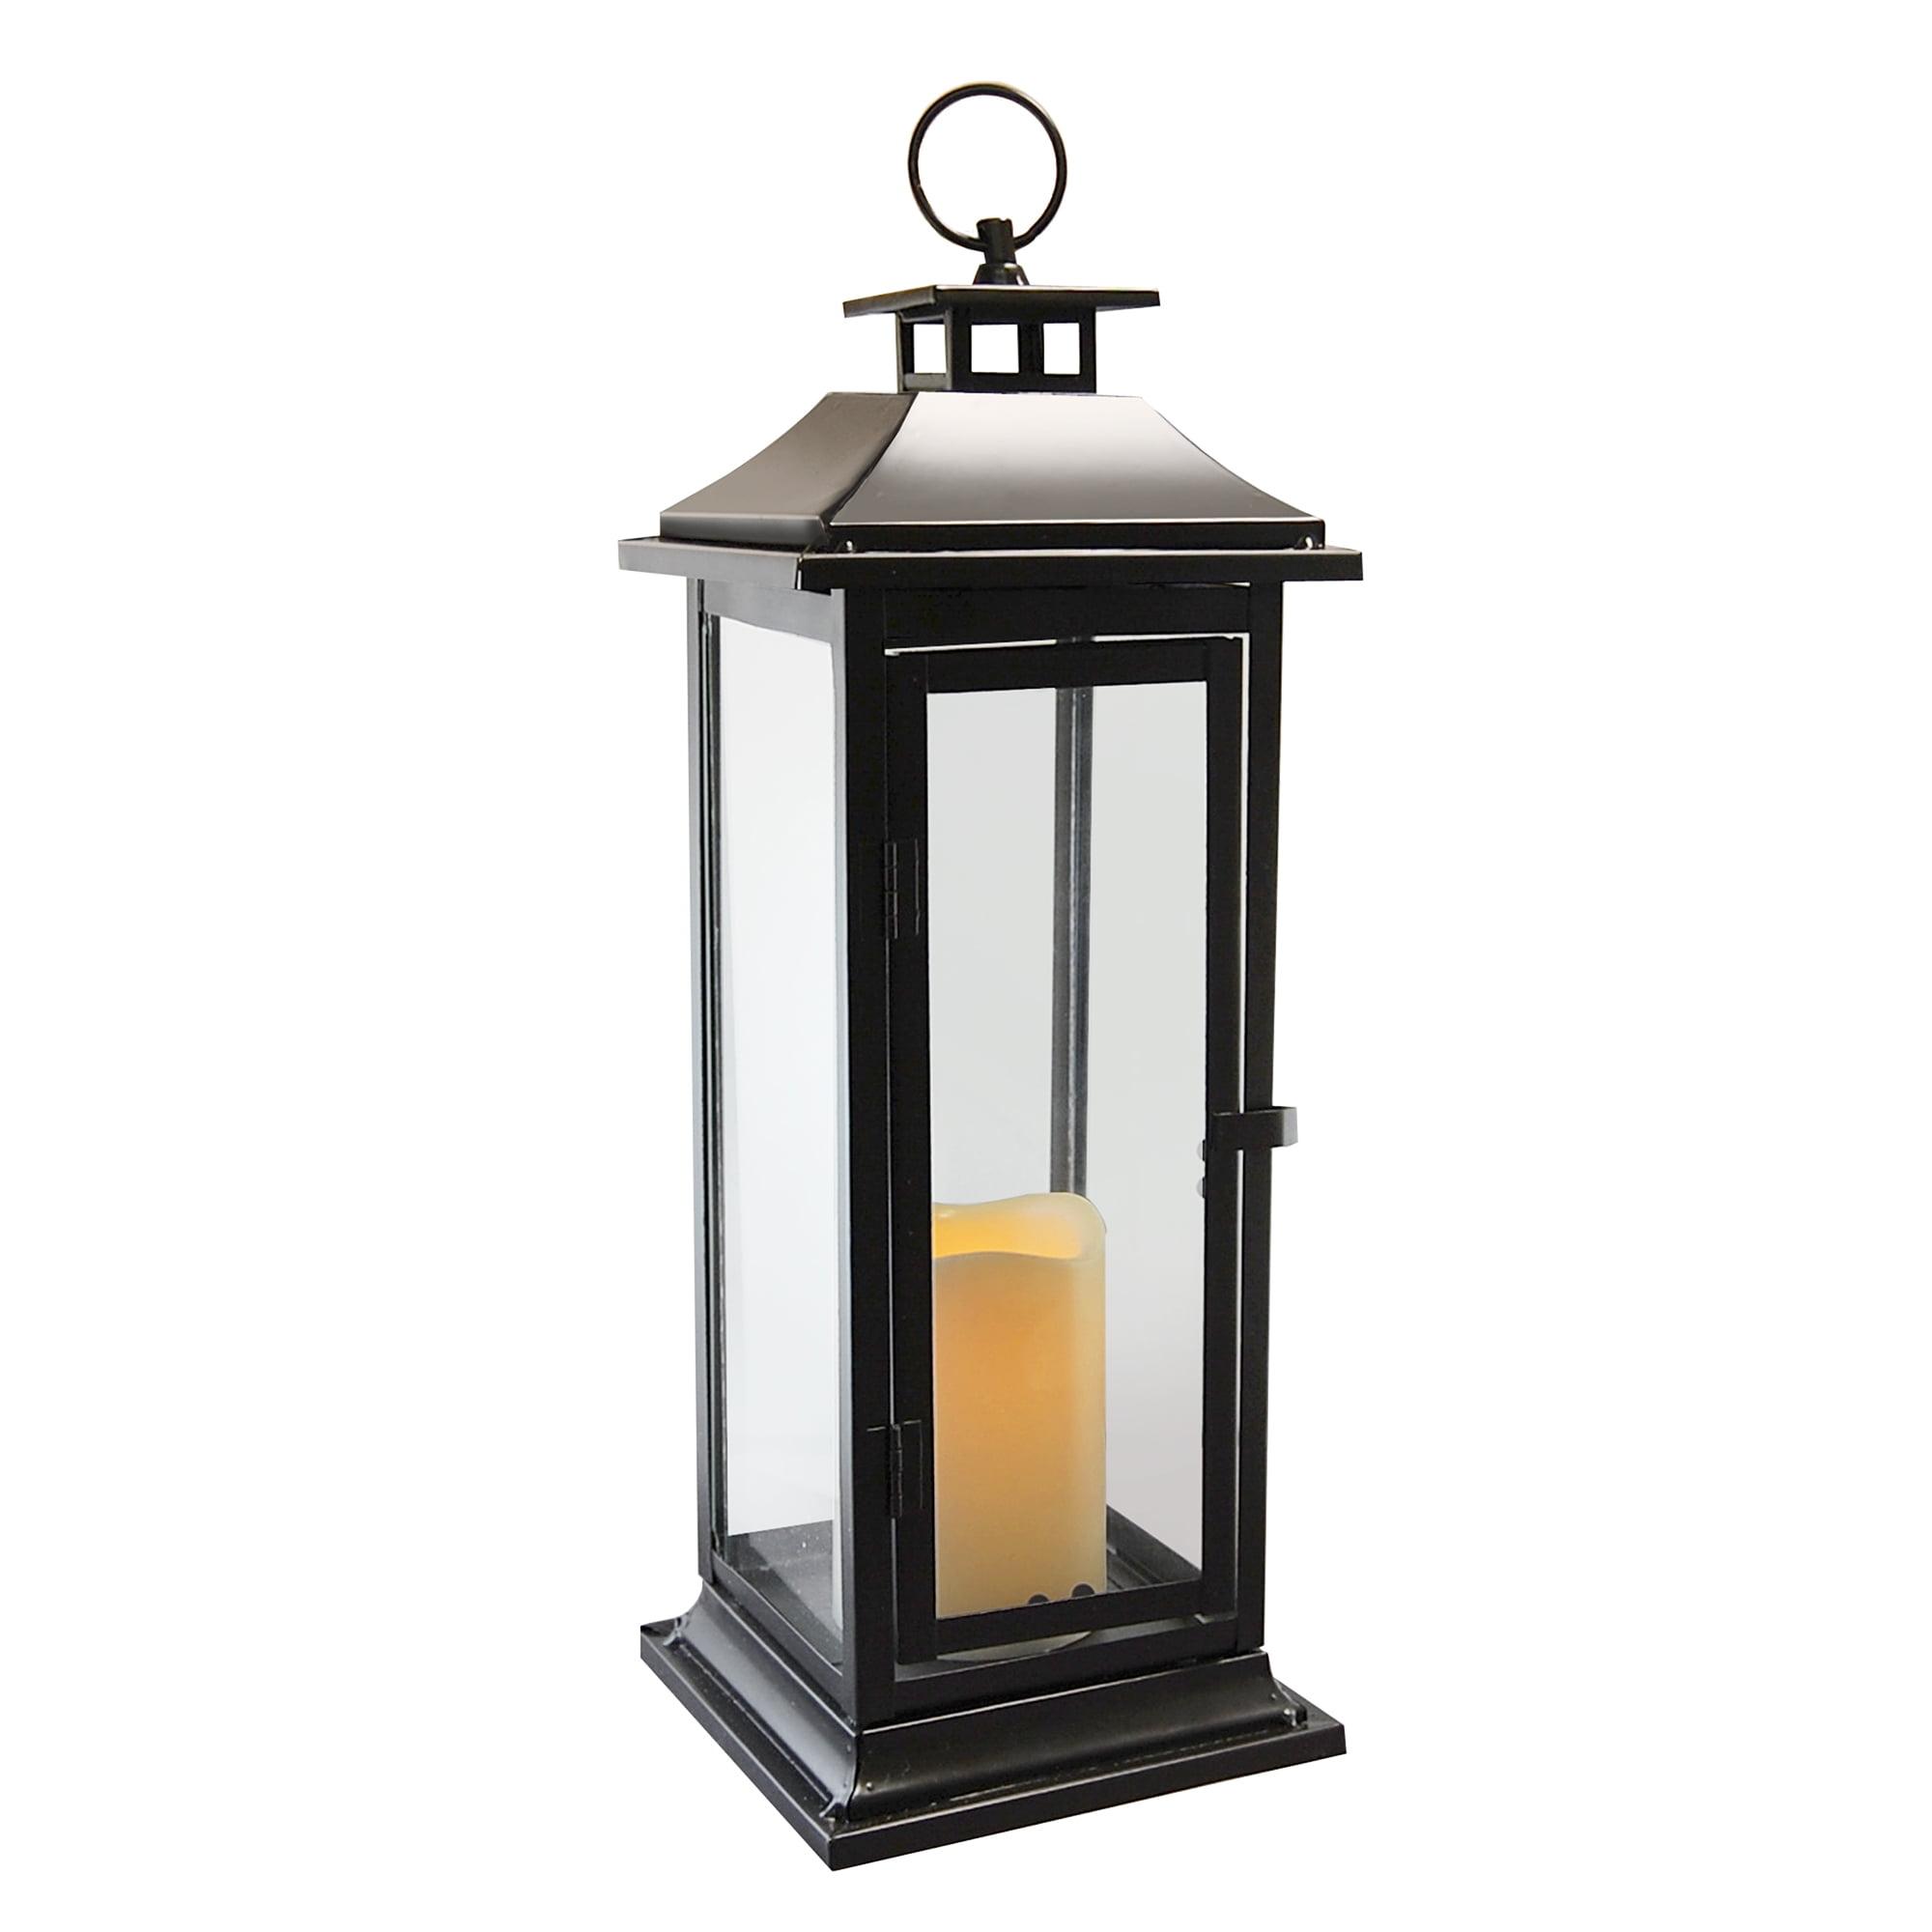 Amber Glow Flameless LED Pillar Lantern in Coastal Style